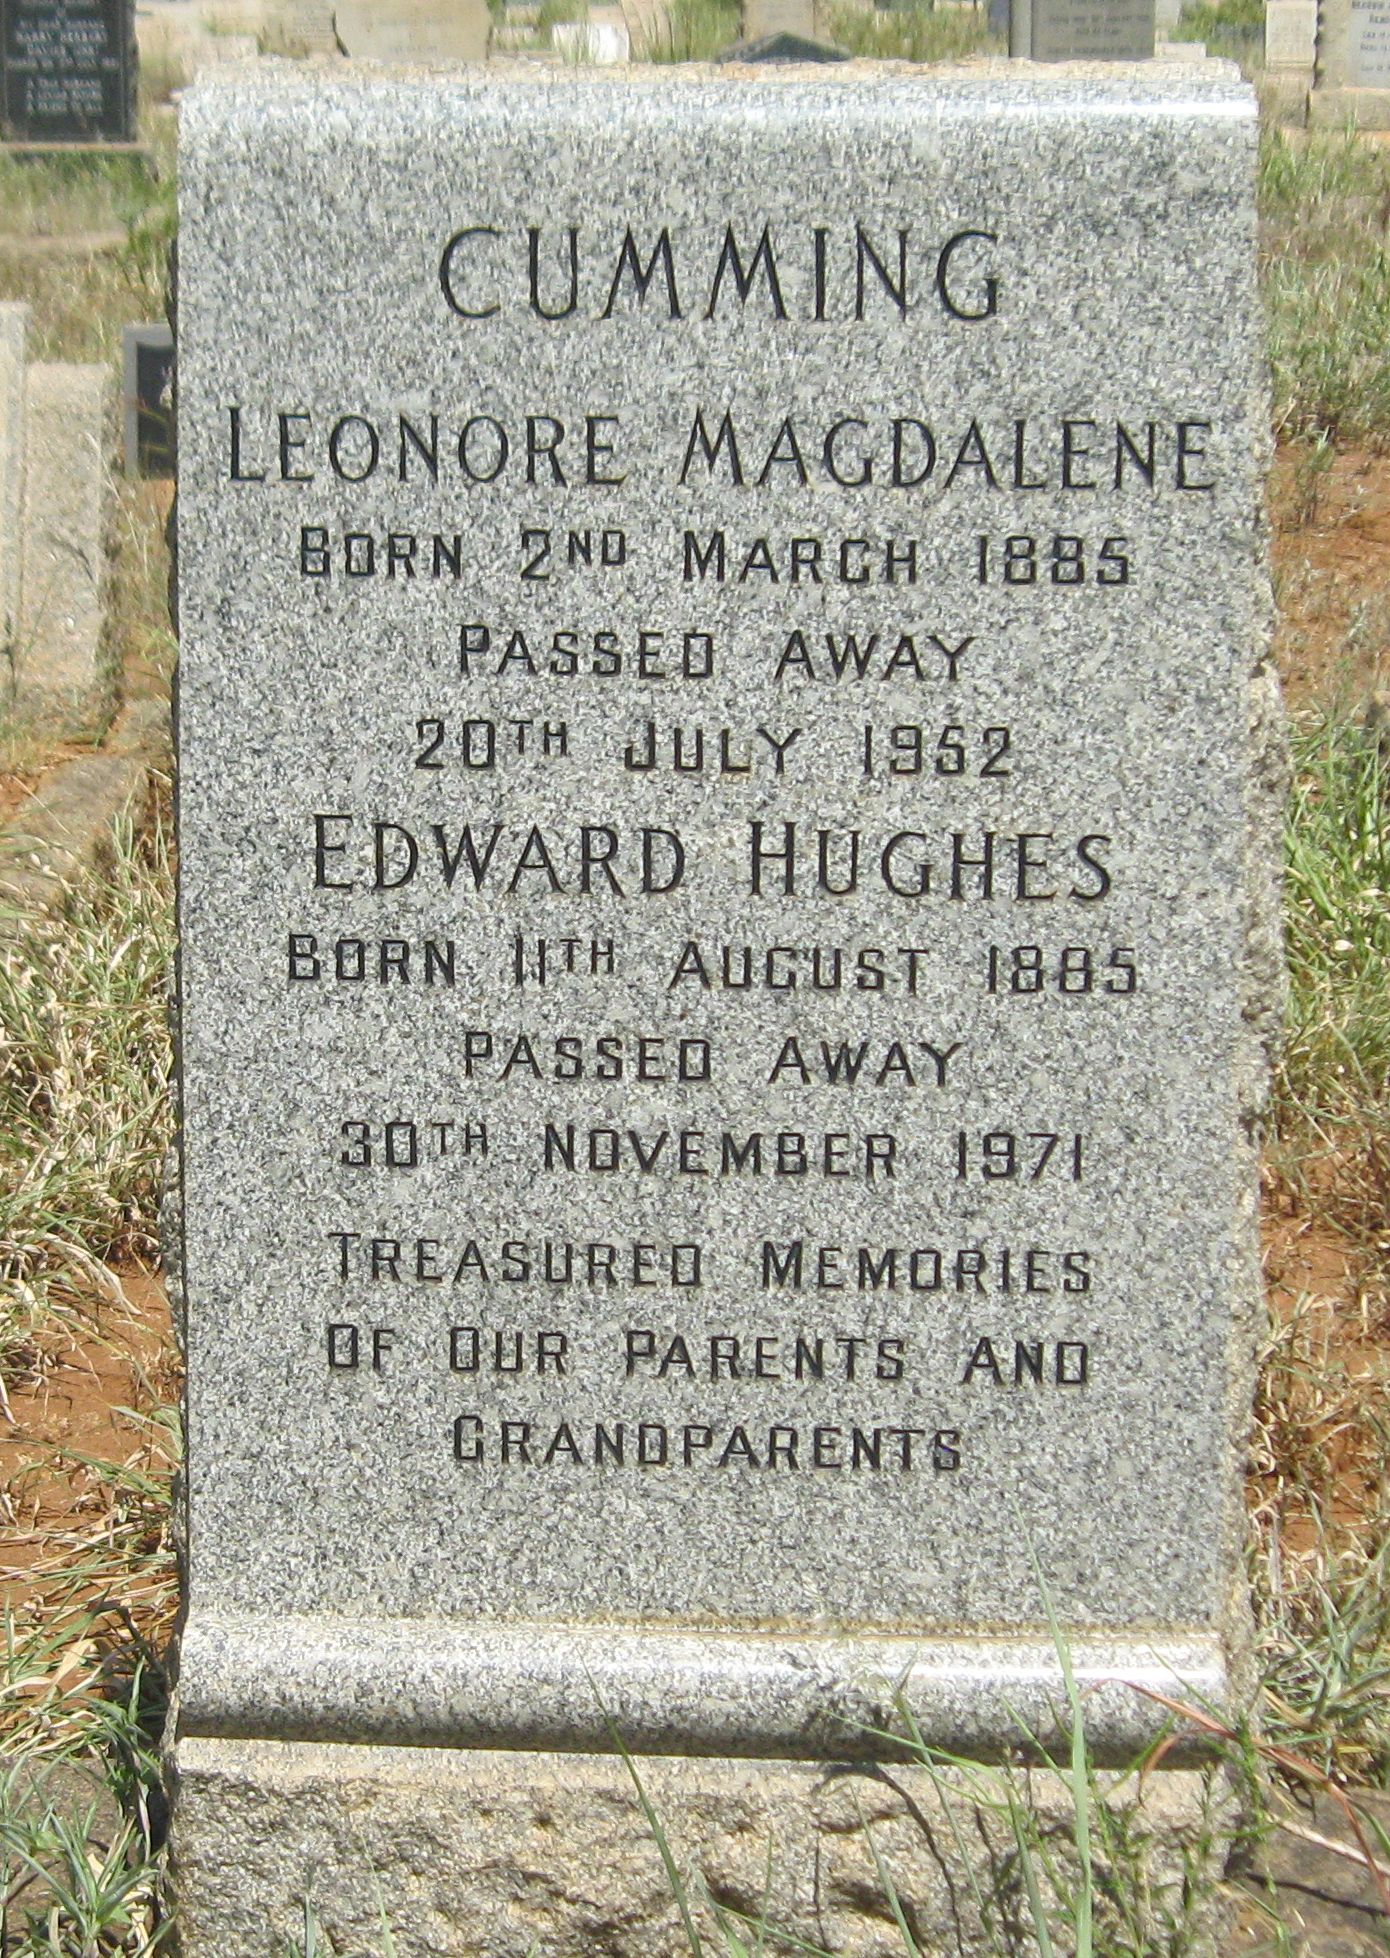 cemeteries_headstone_byo_cumming_leanore_edward_hughes_1952+1971